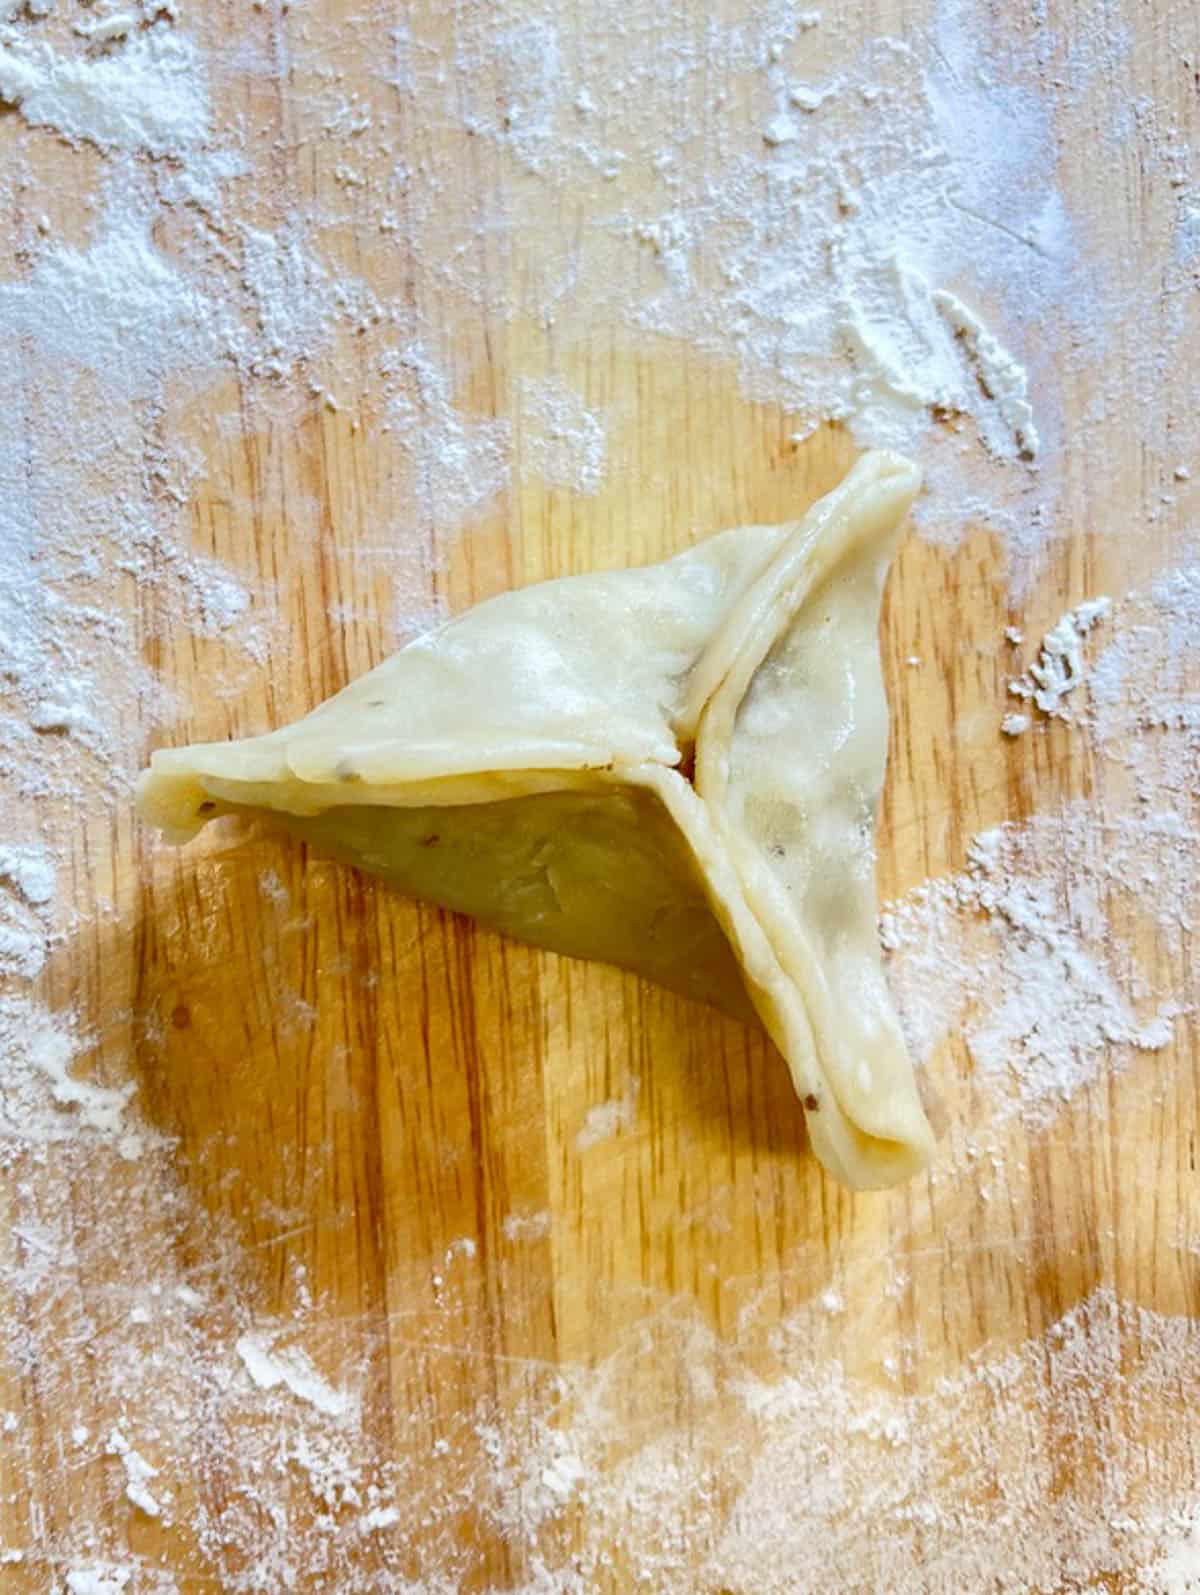 A triangle-shaped dumpling resembling an onion samosa, resting on a cutting board.